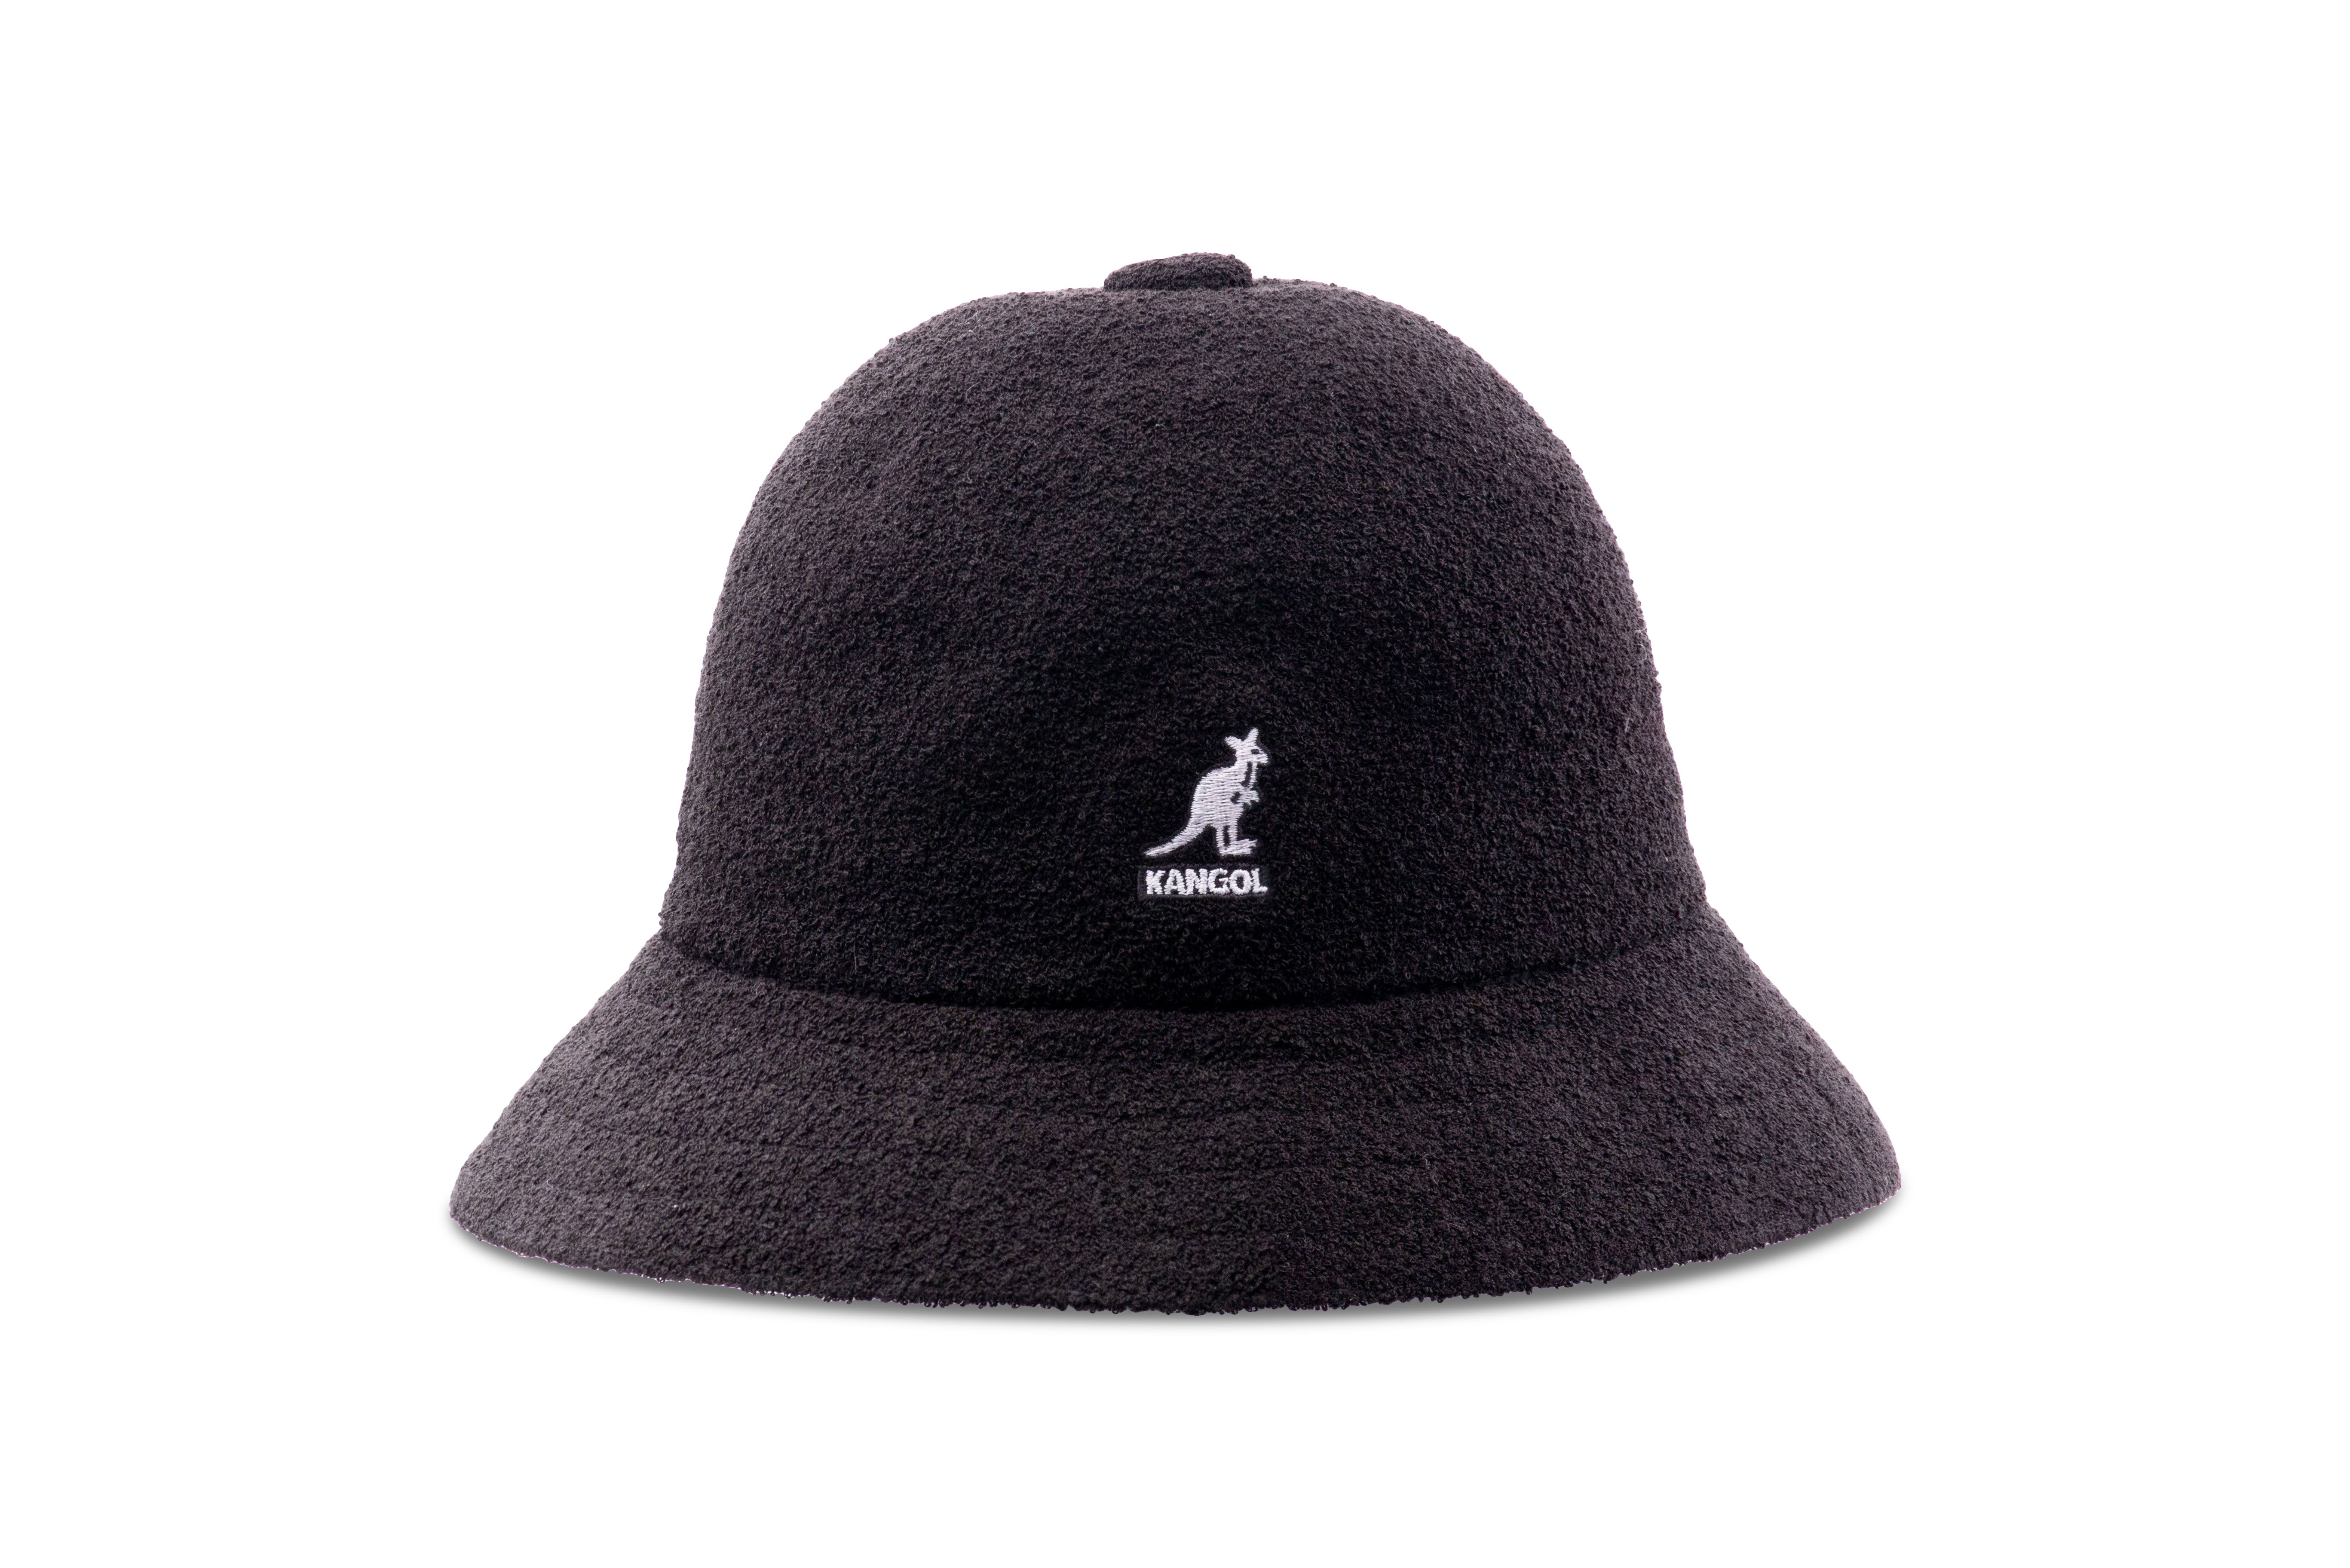 Kangol Bucket Bermuda Unisex Hat - Black - L